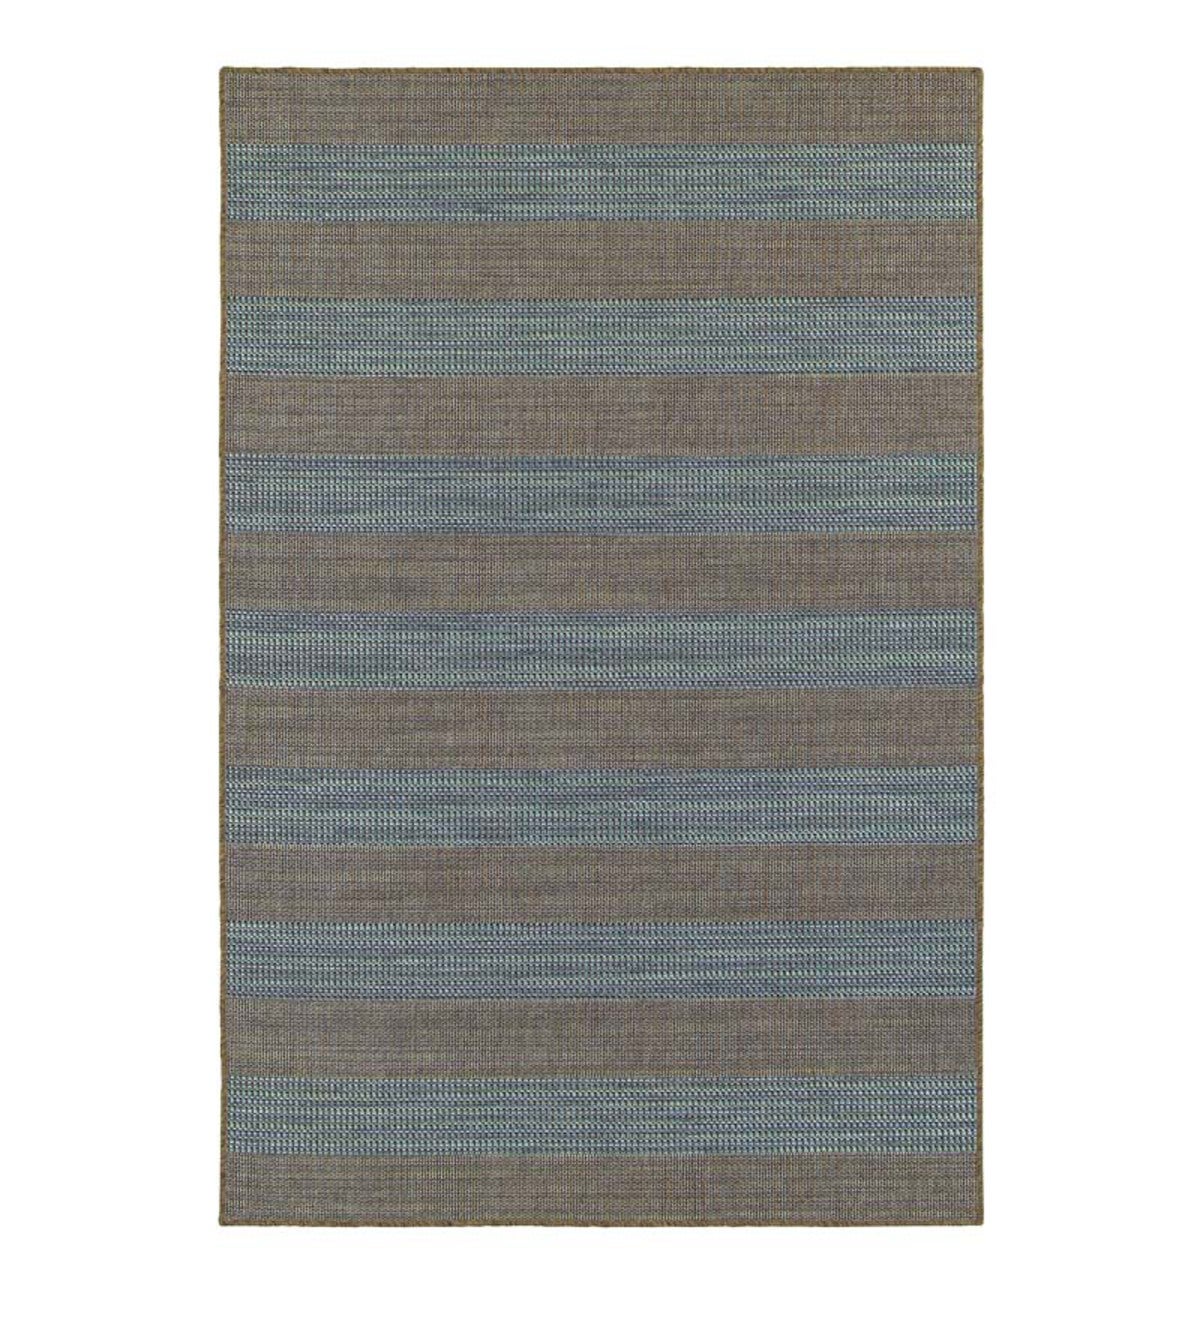 Elements Striped Indoor/Outdoor Rug, 5'3”x 7'6” - Blue/Tan